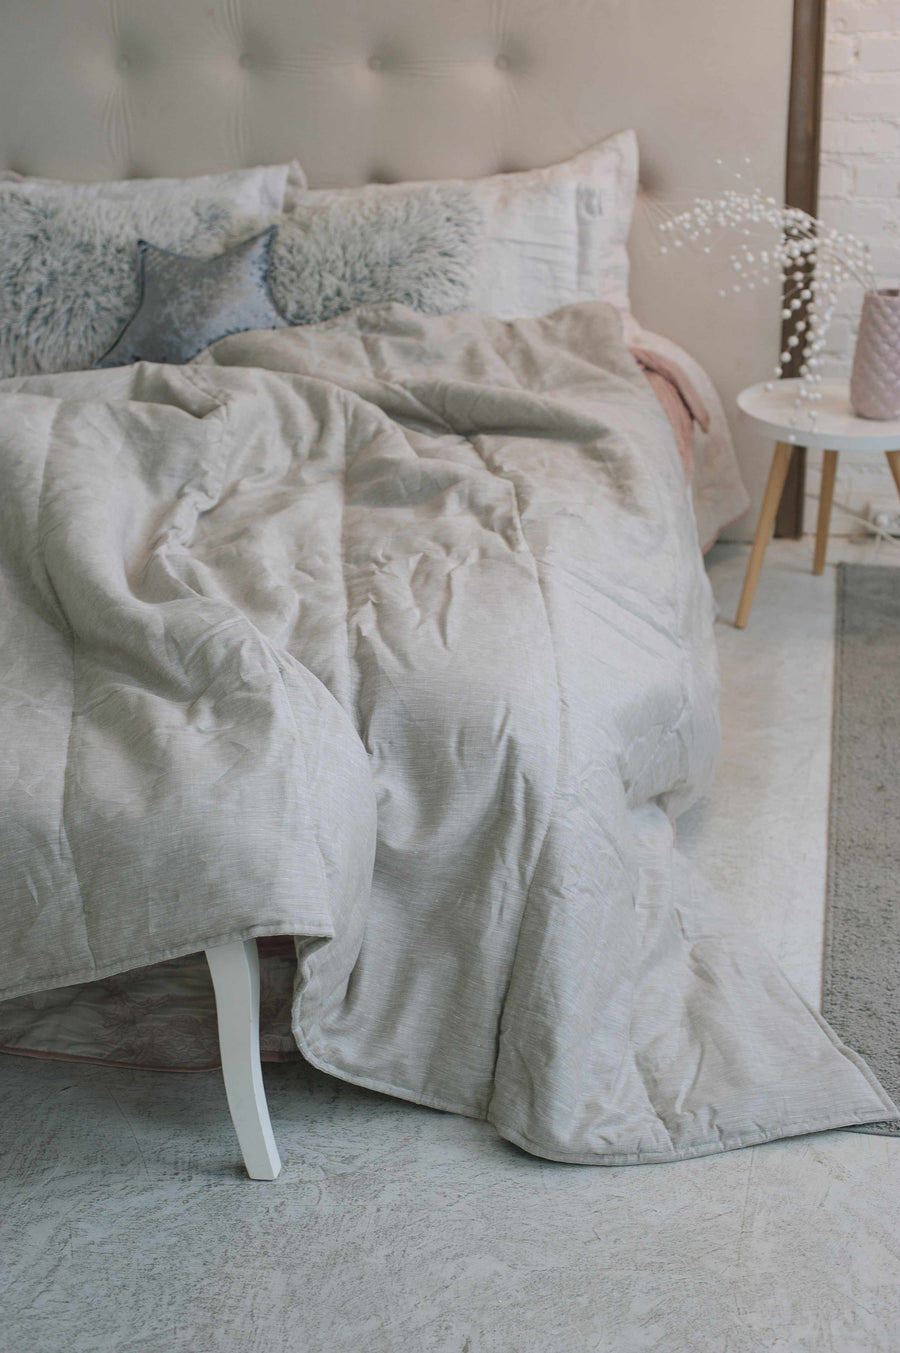 Natural Grey HEMP Linen blanket quilt in stripe- filler organic Hemp fiber in natural linen fabric customer sizes